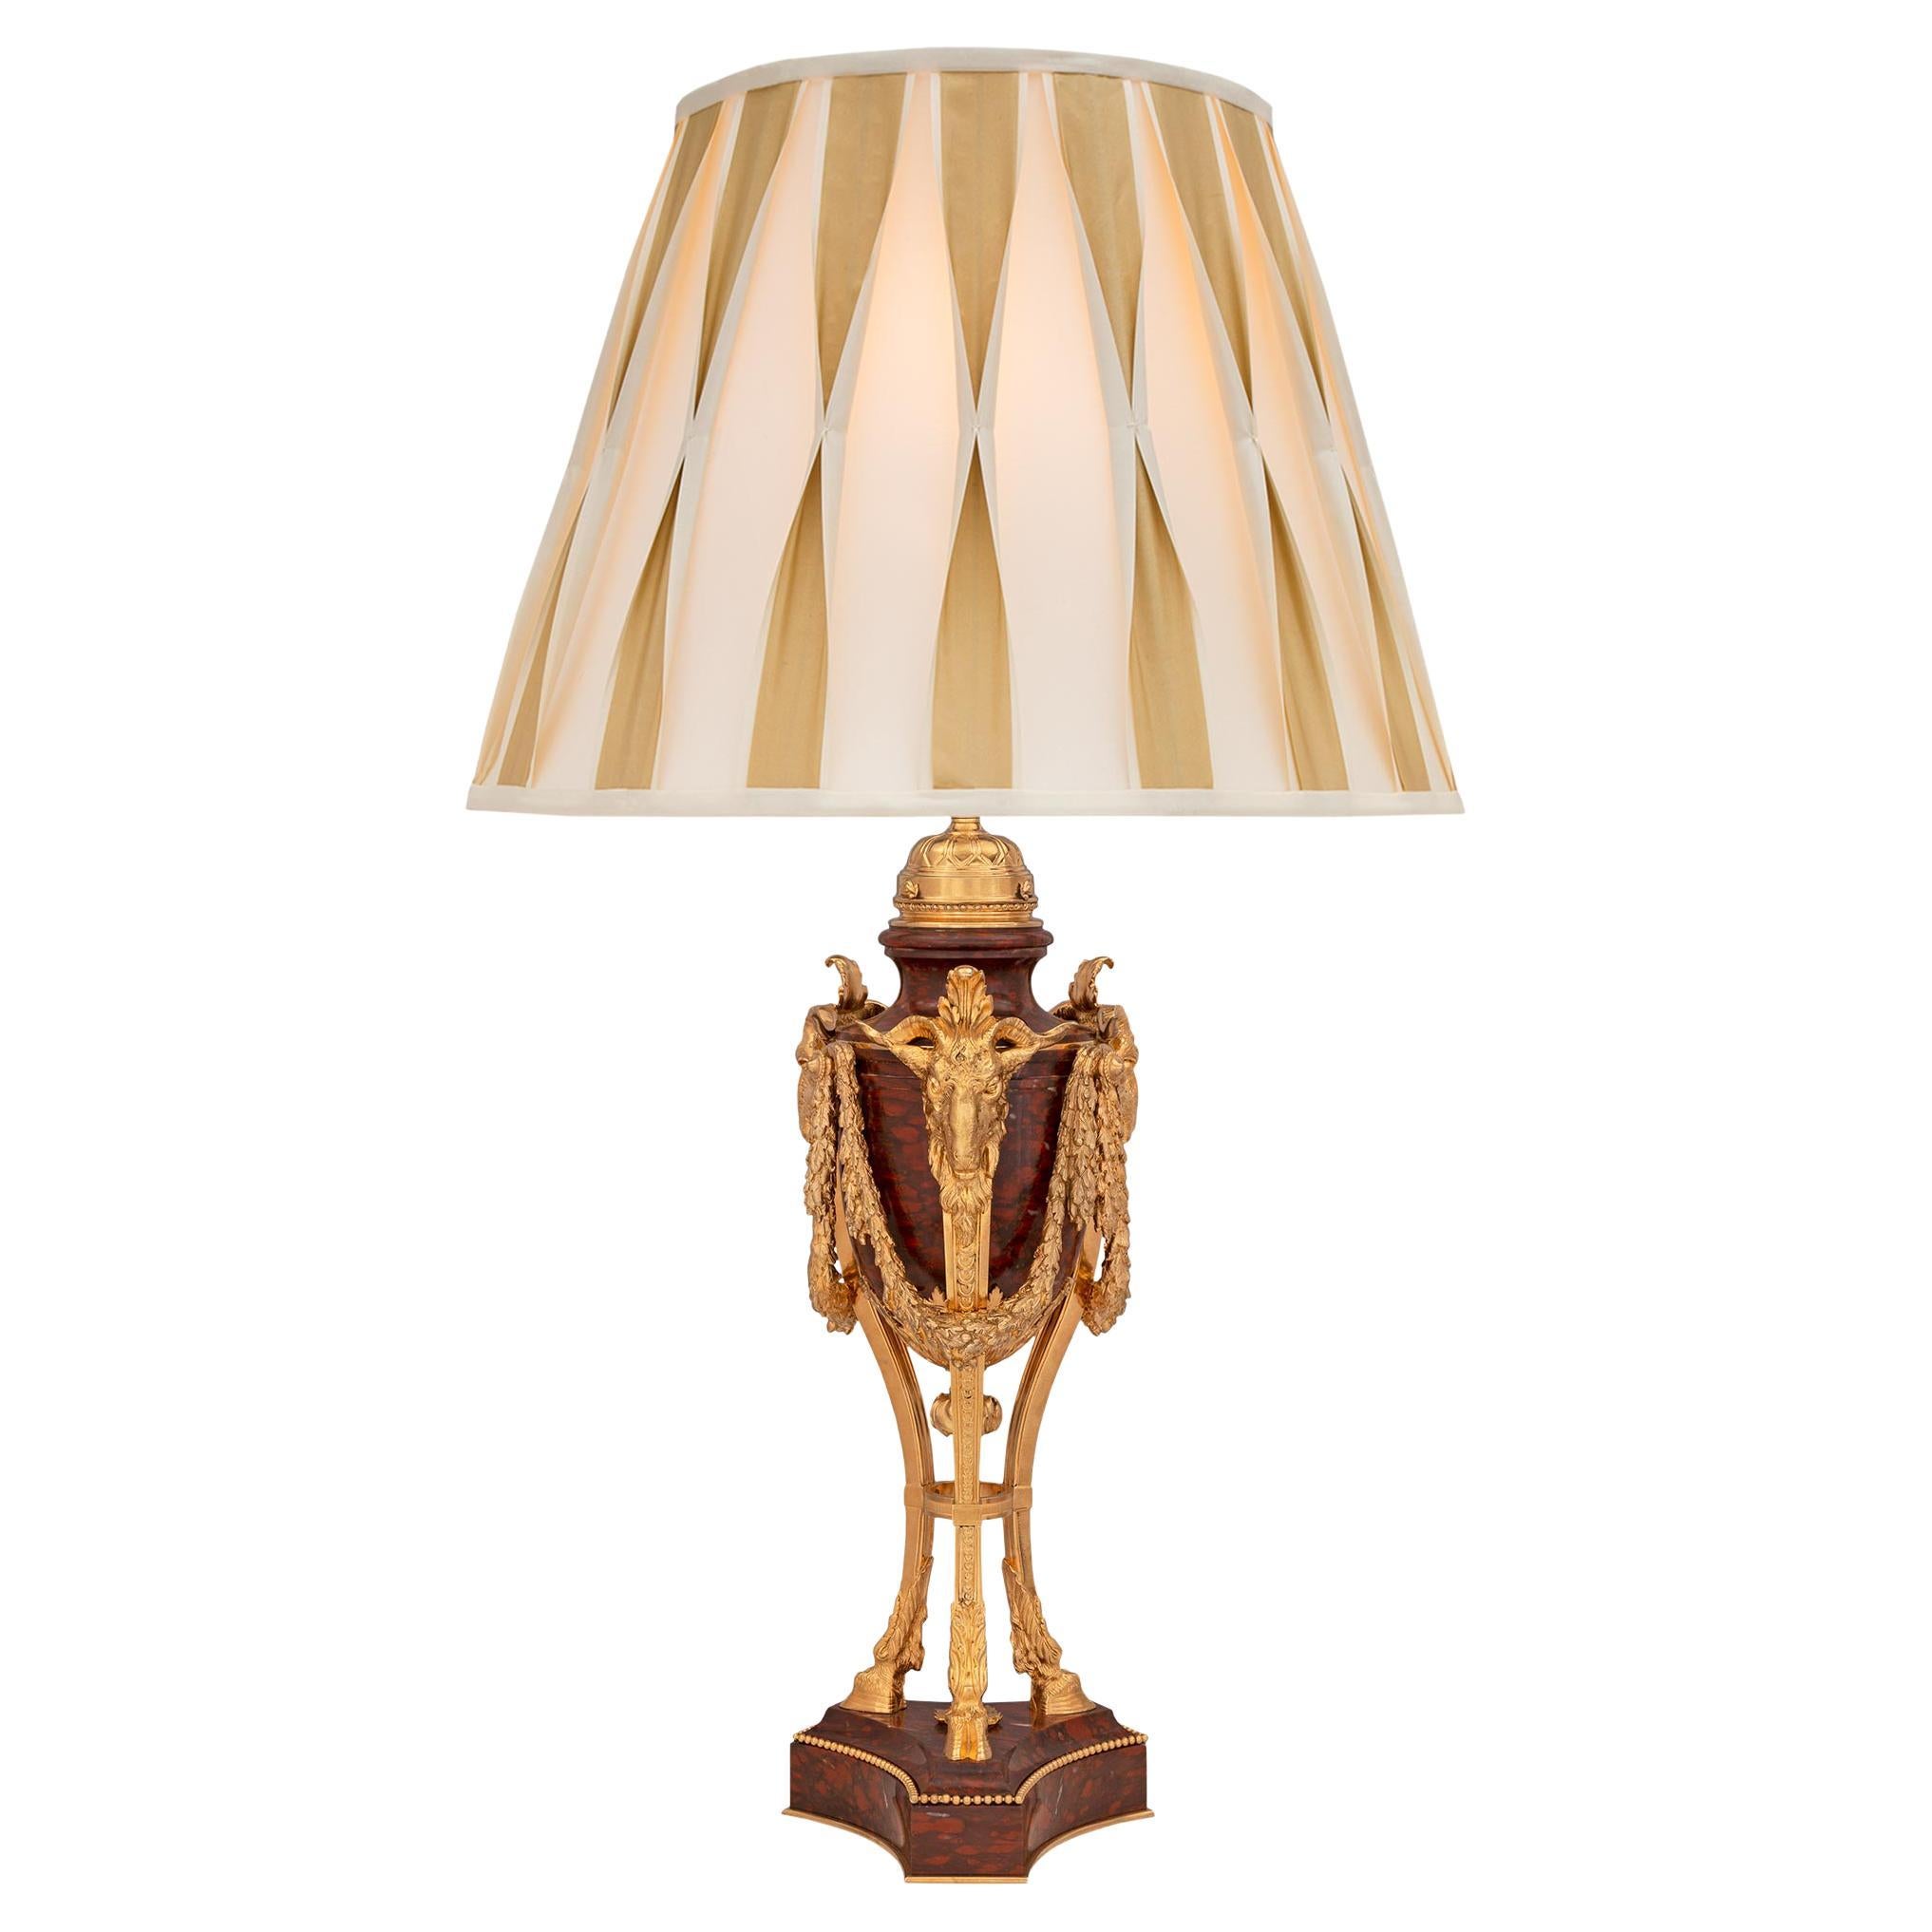 French 19th Century Louis XVI St. Belle Époque Period Lamp